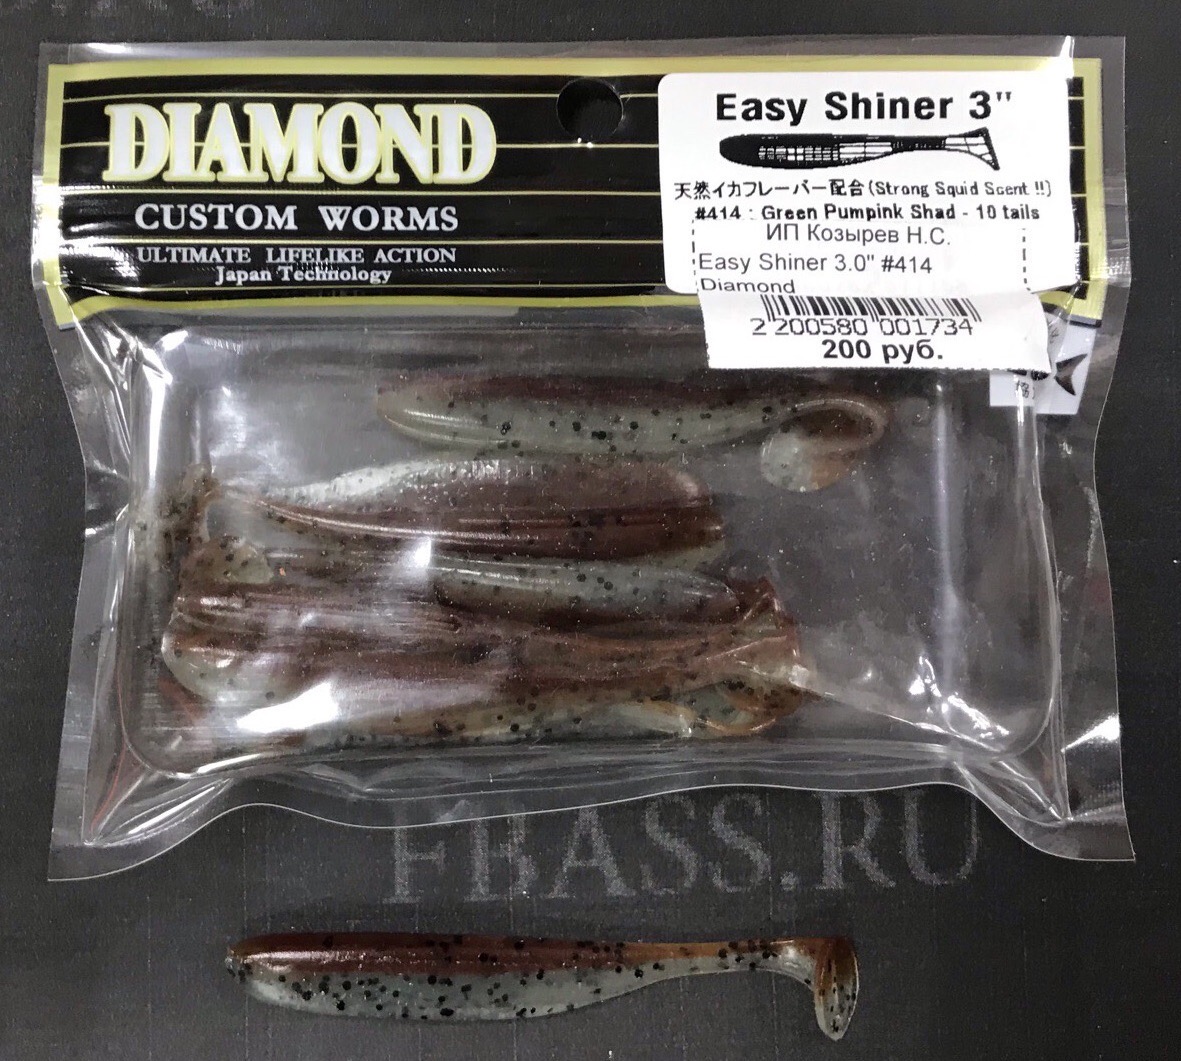 Easy Shiner 3.0" #414 Diamond, шт